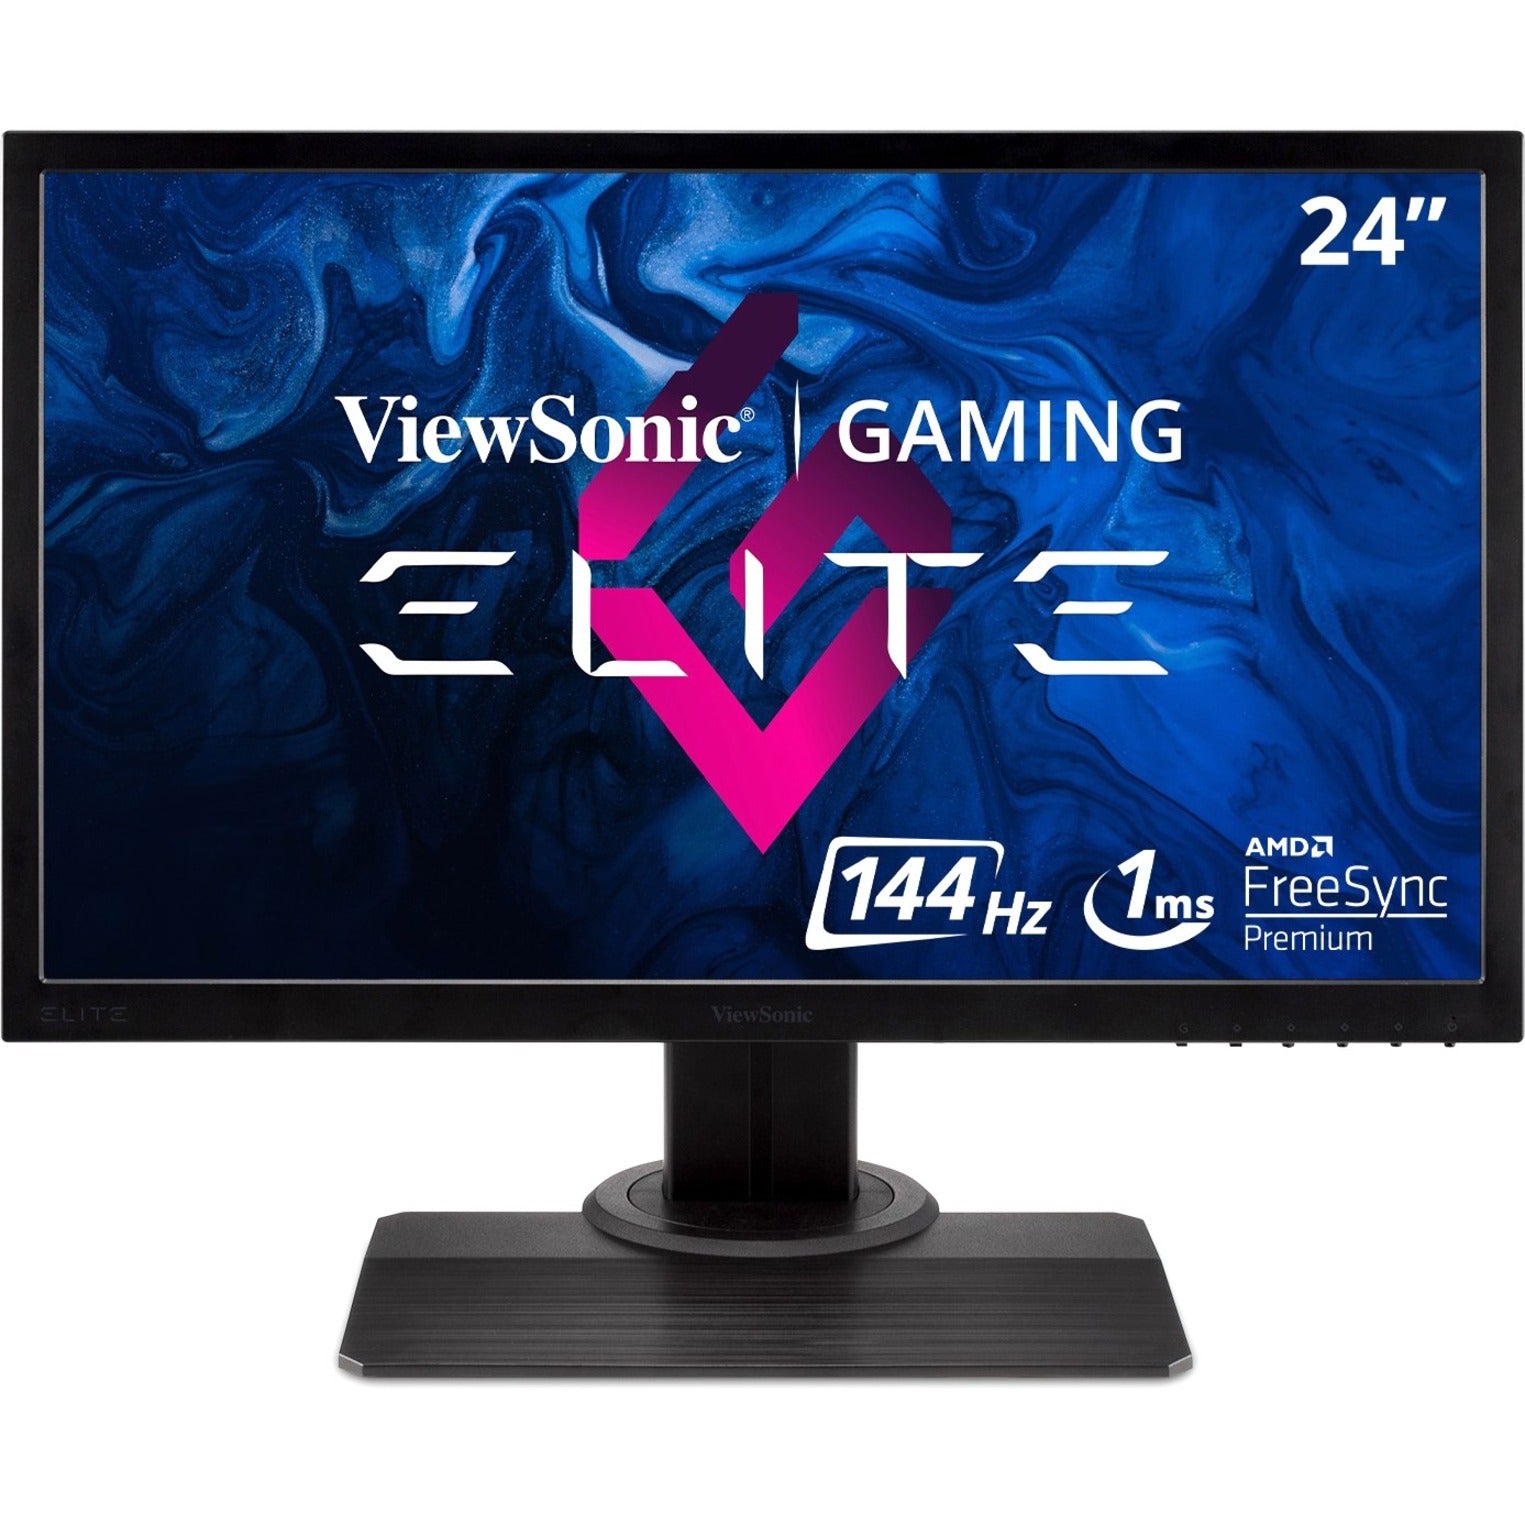 ViewSonic XG240R Elite 24 Gaming Monitor, 144Hz Refresh Rate, Rapid Response Time